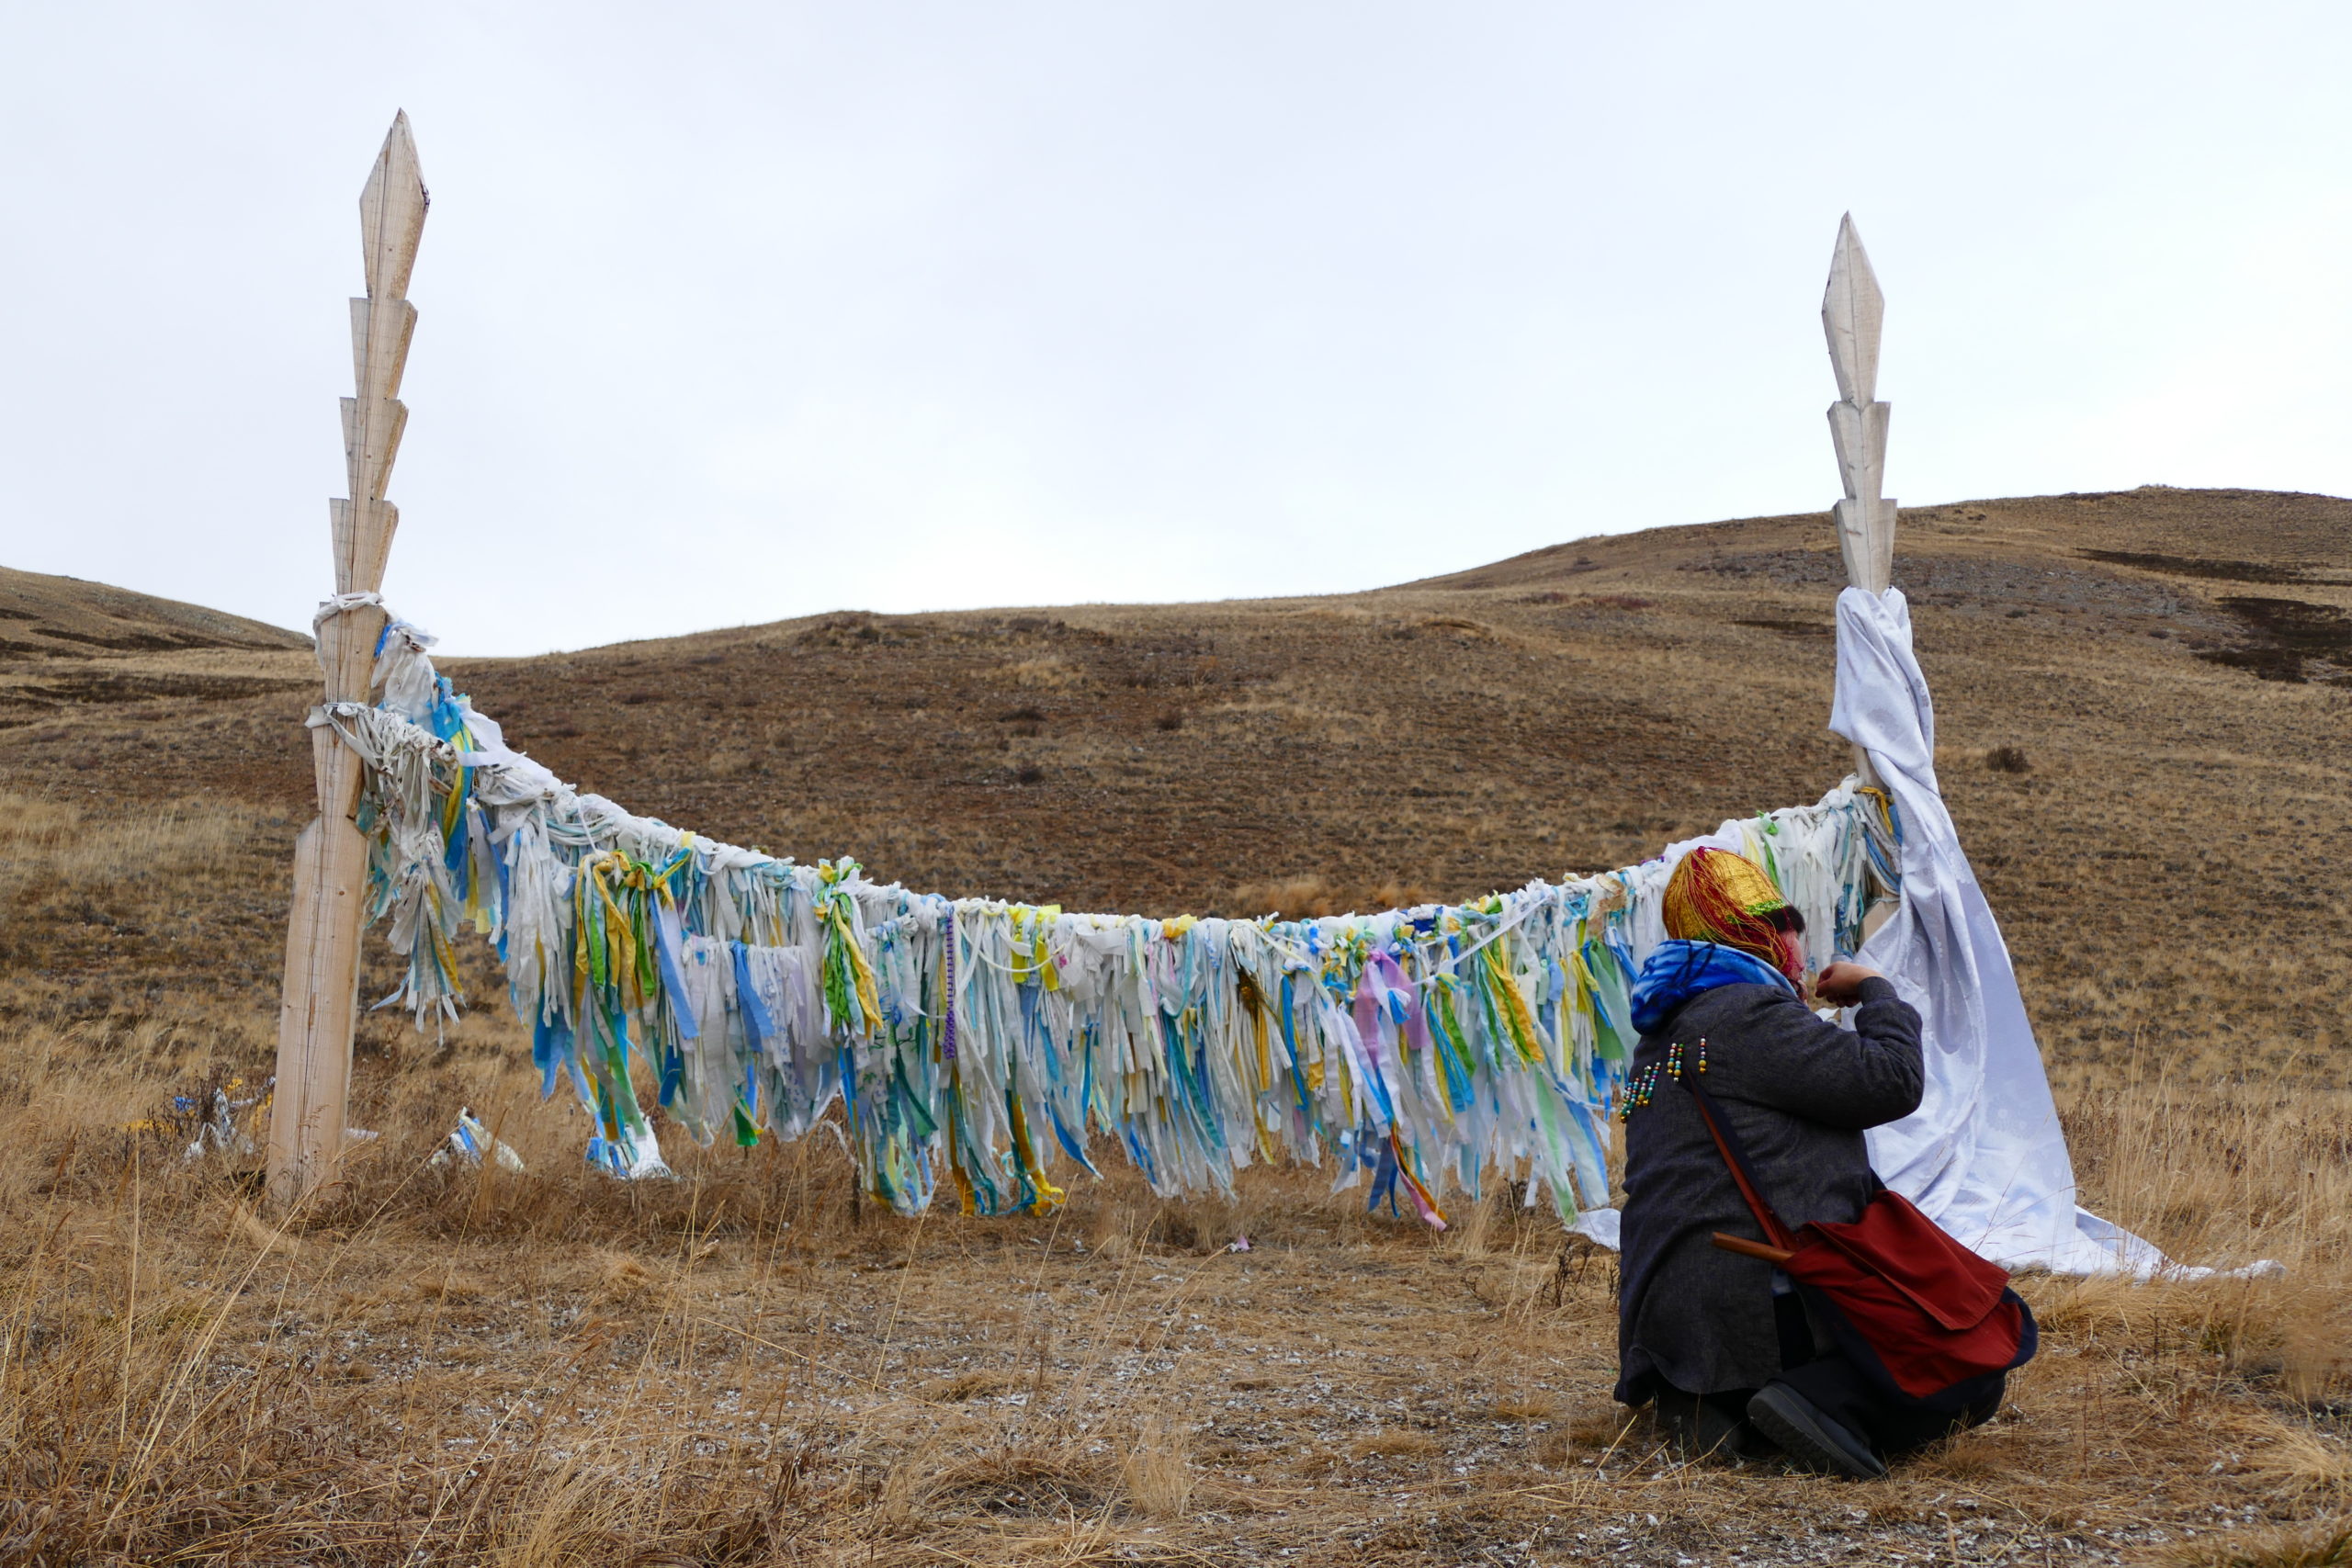 Dyalama ribbon tying as a spiritual practice - The Altai Project